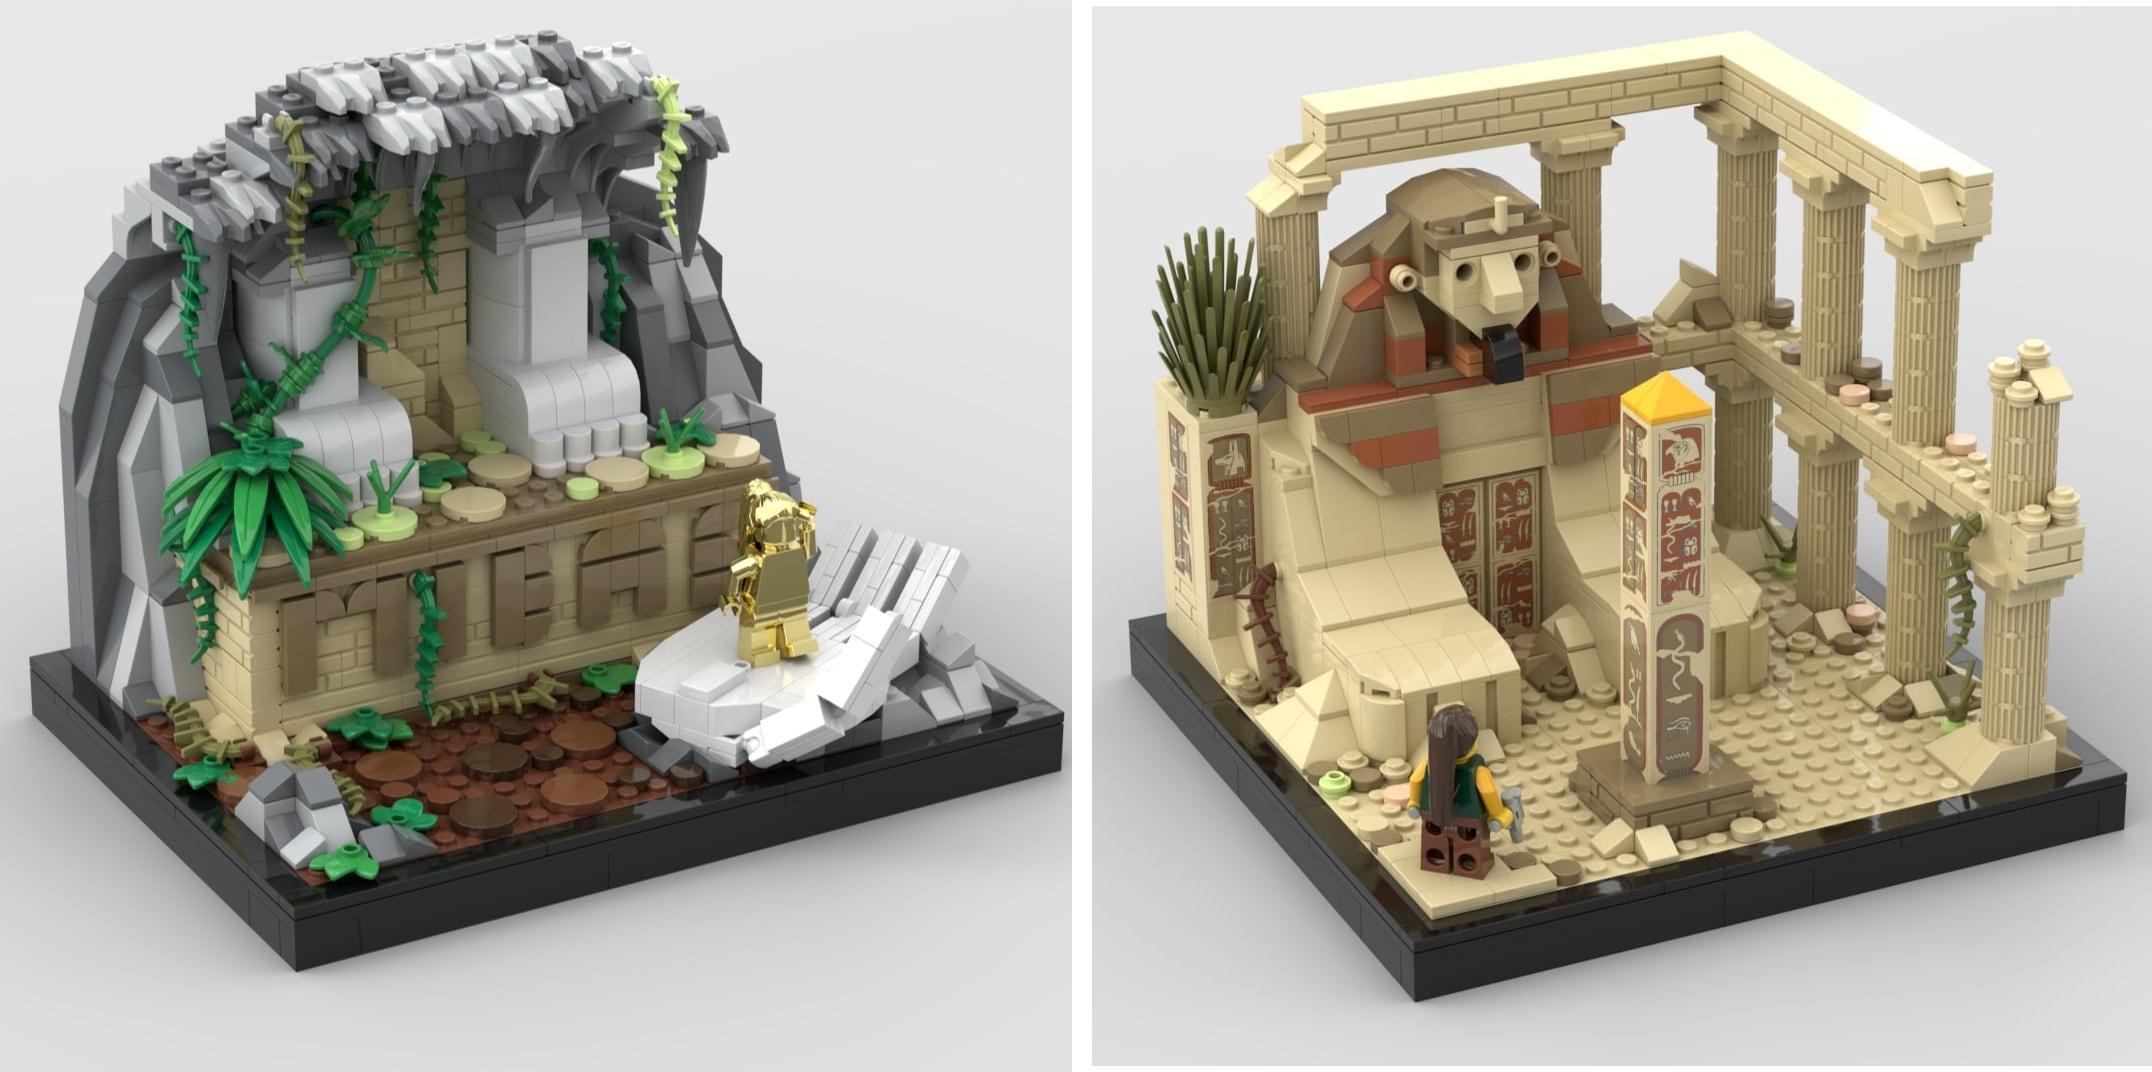 Tomb Raider level sets (Palace Midas, City of Khamoon) made with LEGO Bricklink Studio.